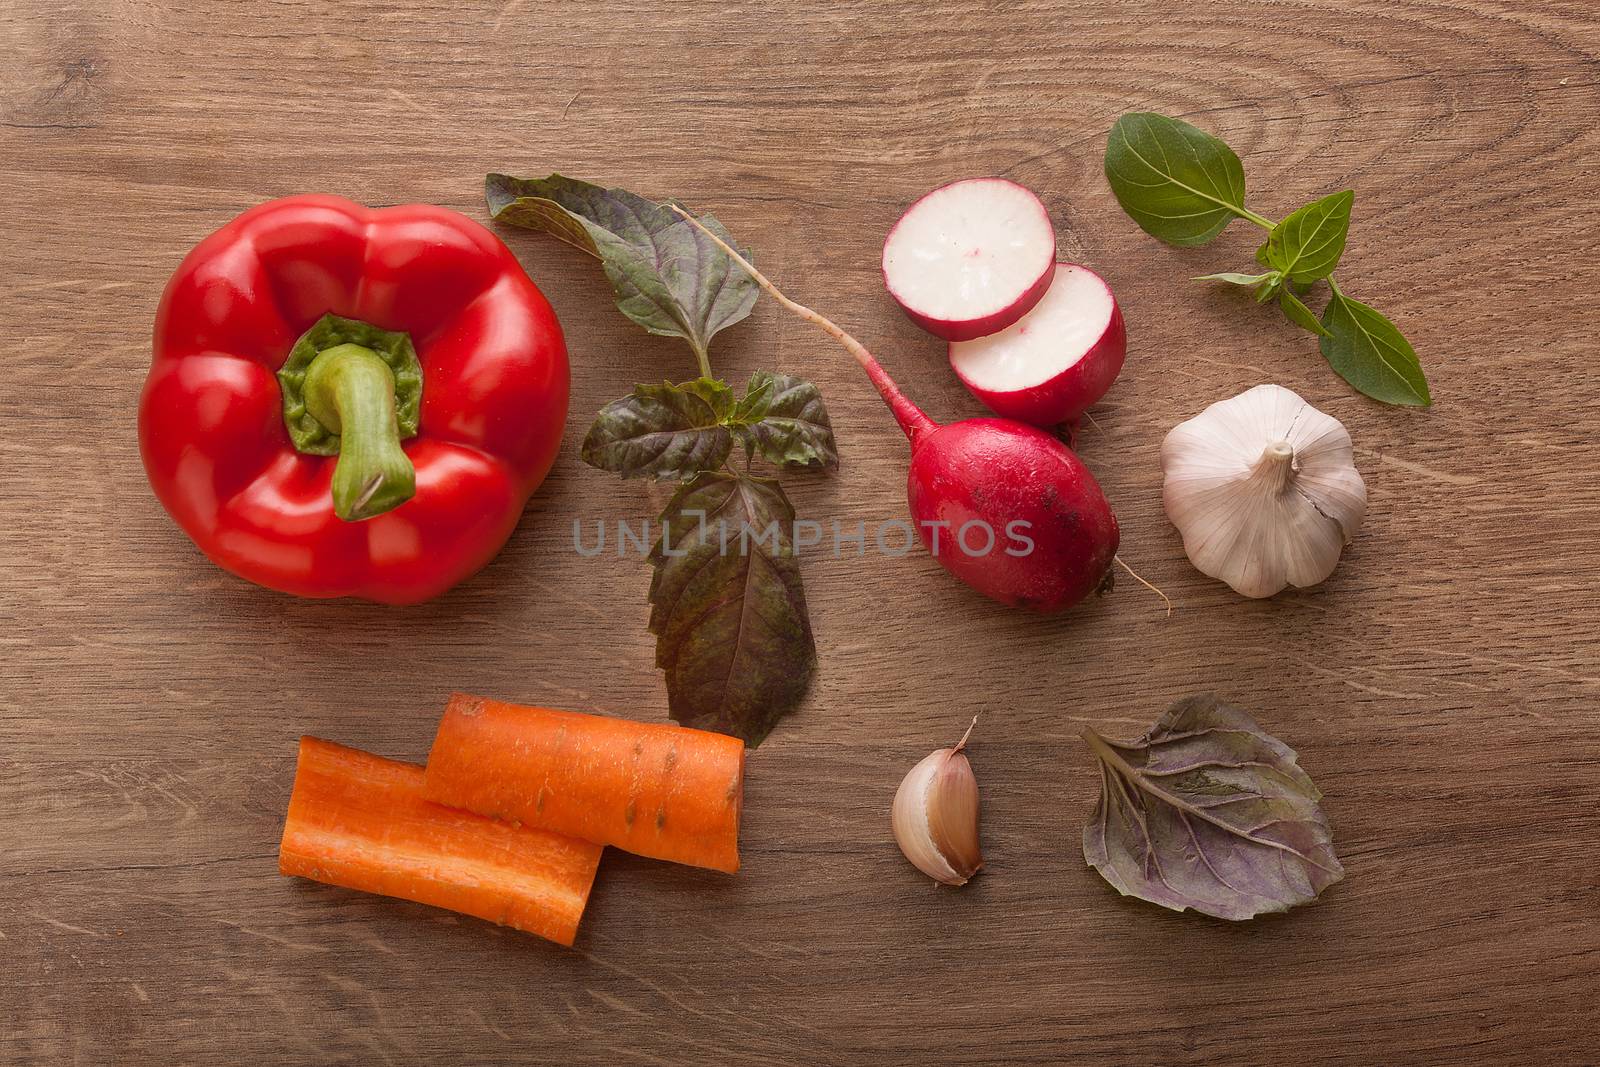 Paprika, radish, carrot, garlic and basil on the wood by Angorius